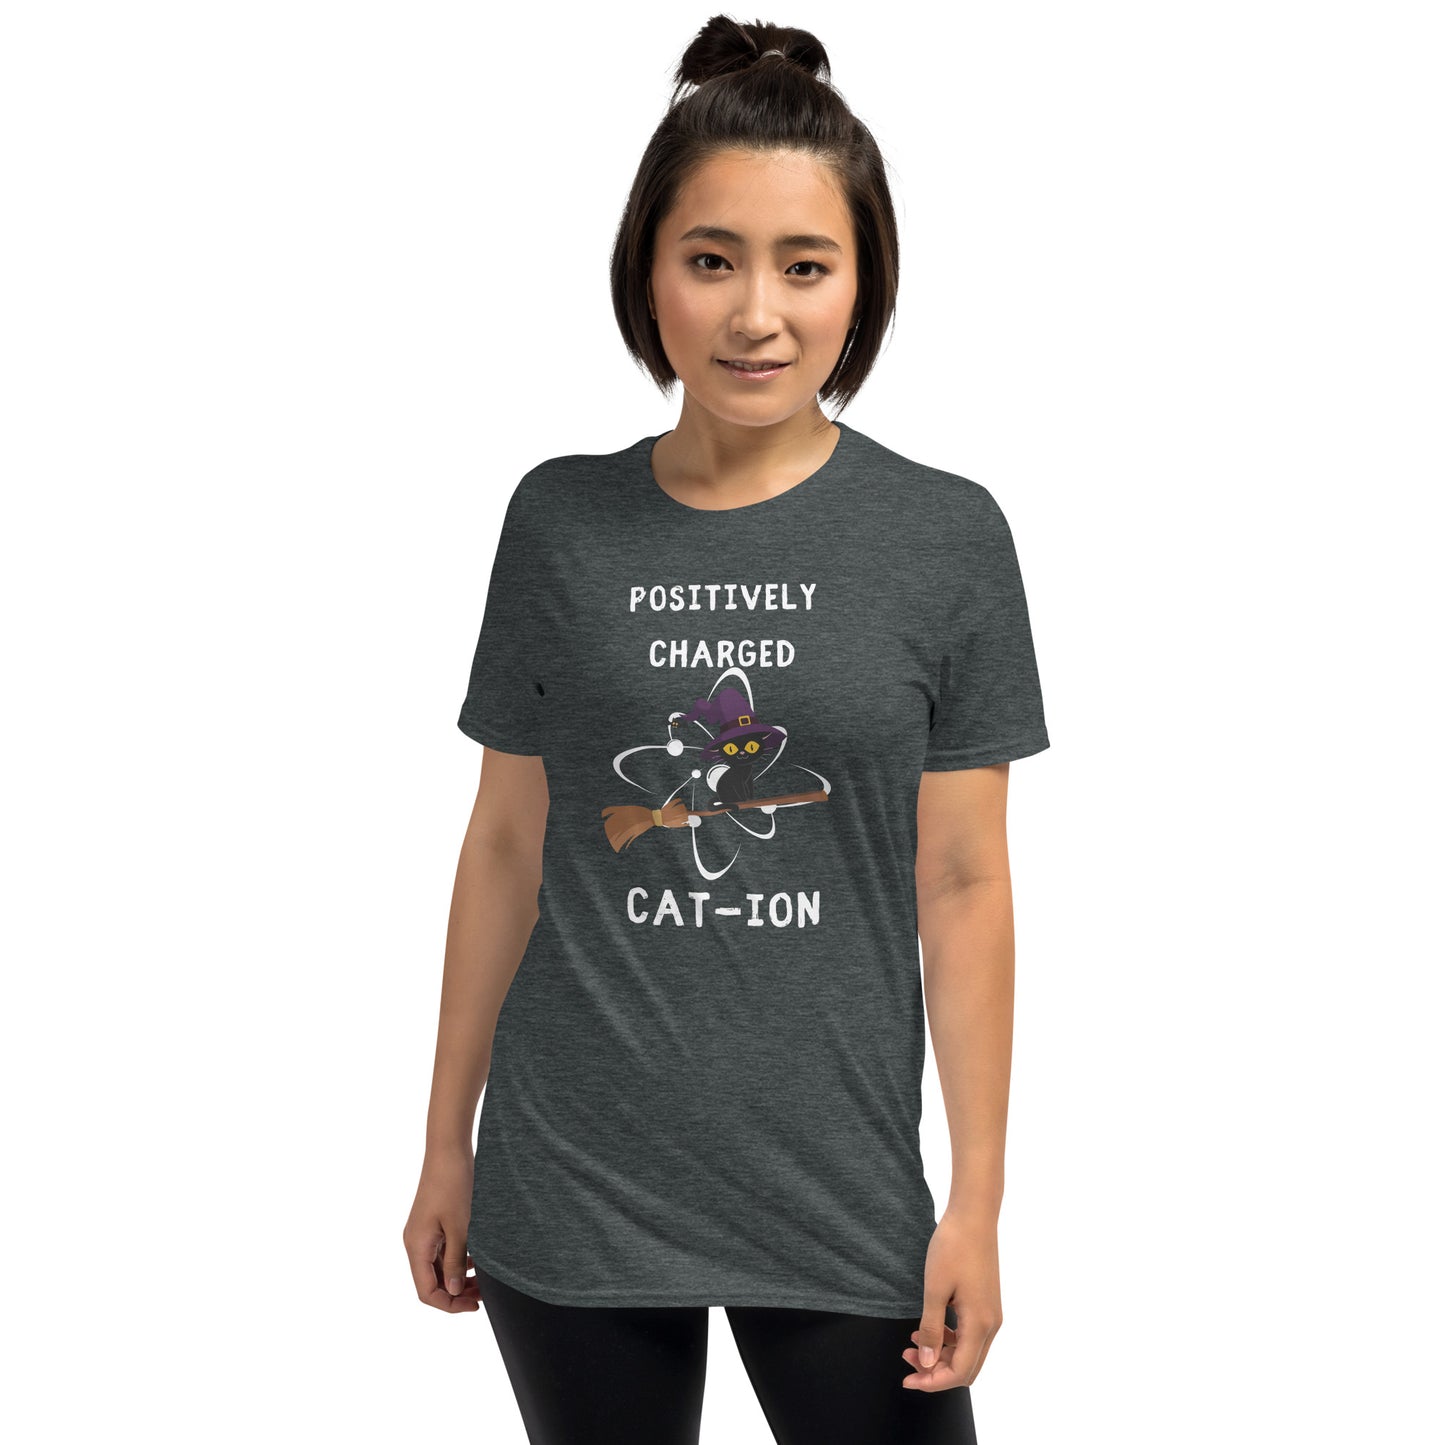 Cation Halloween T-Shirt